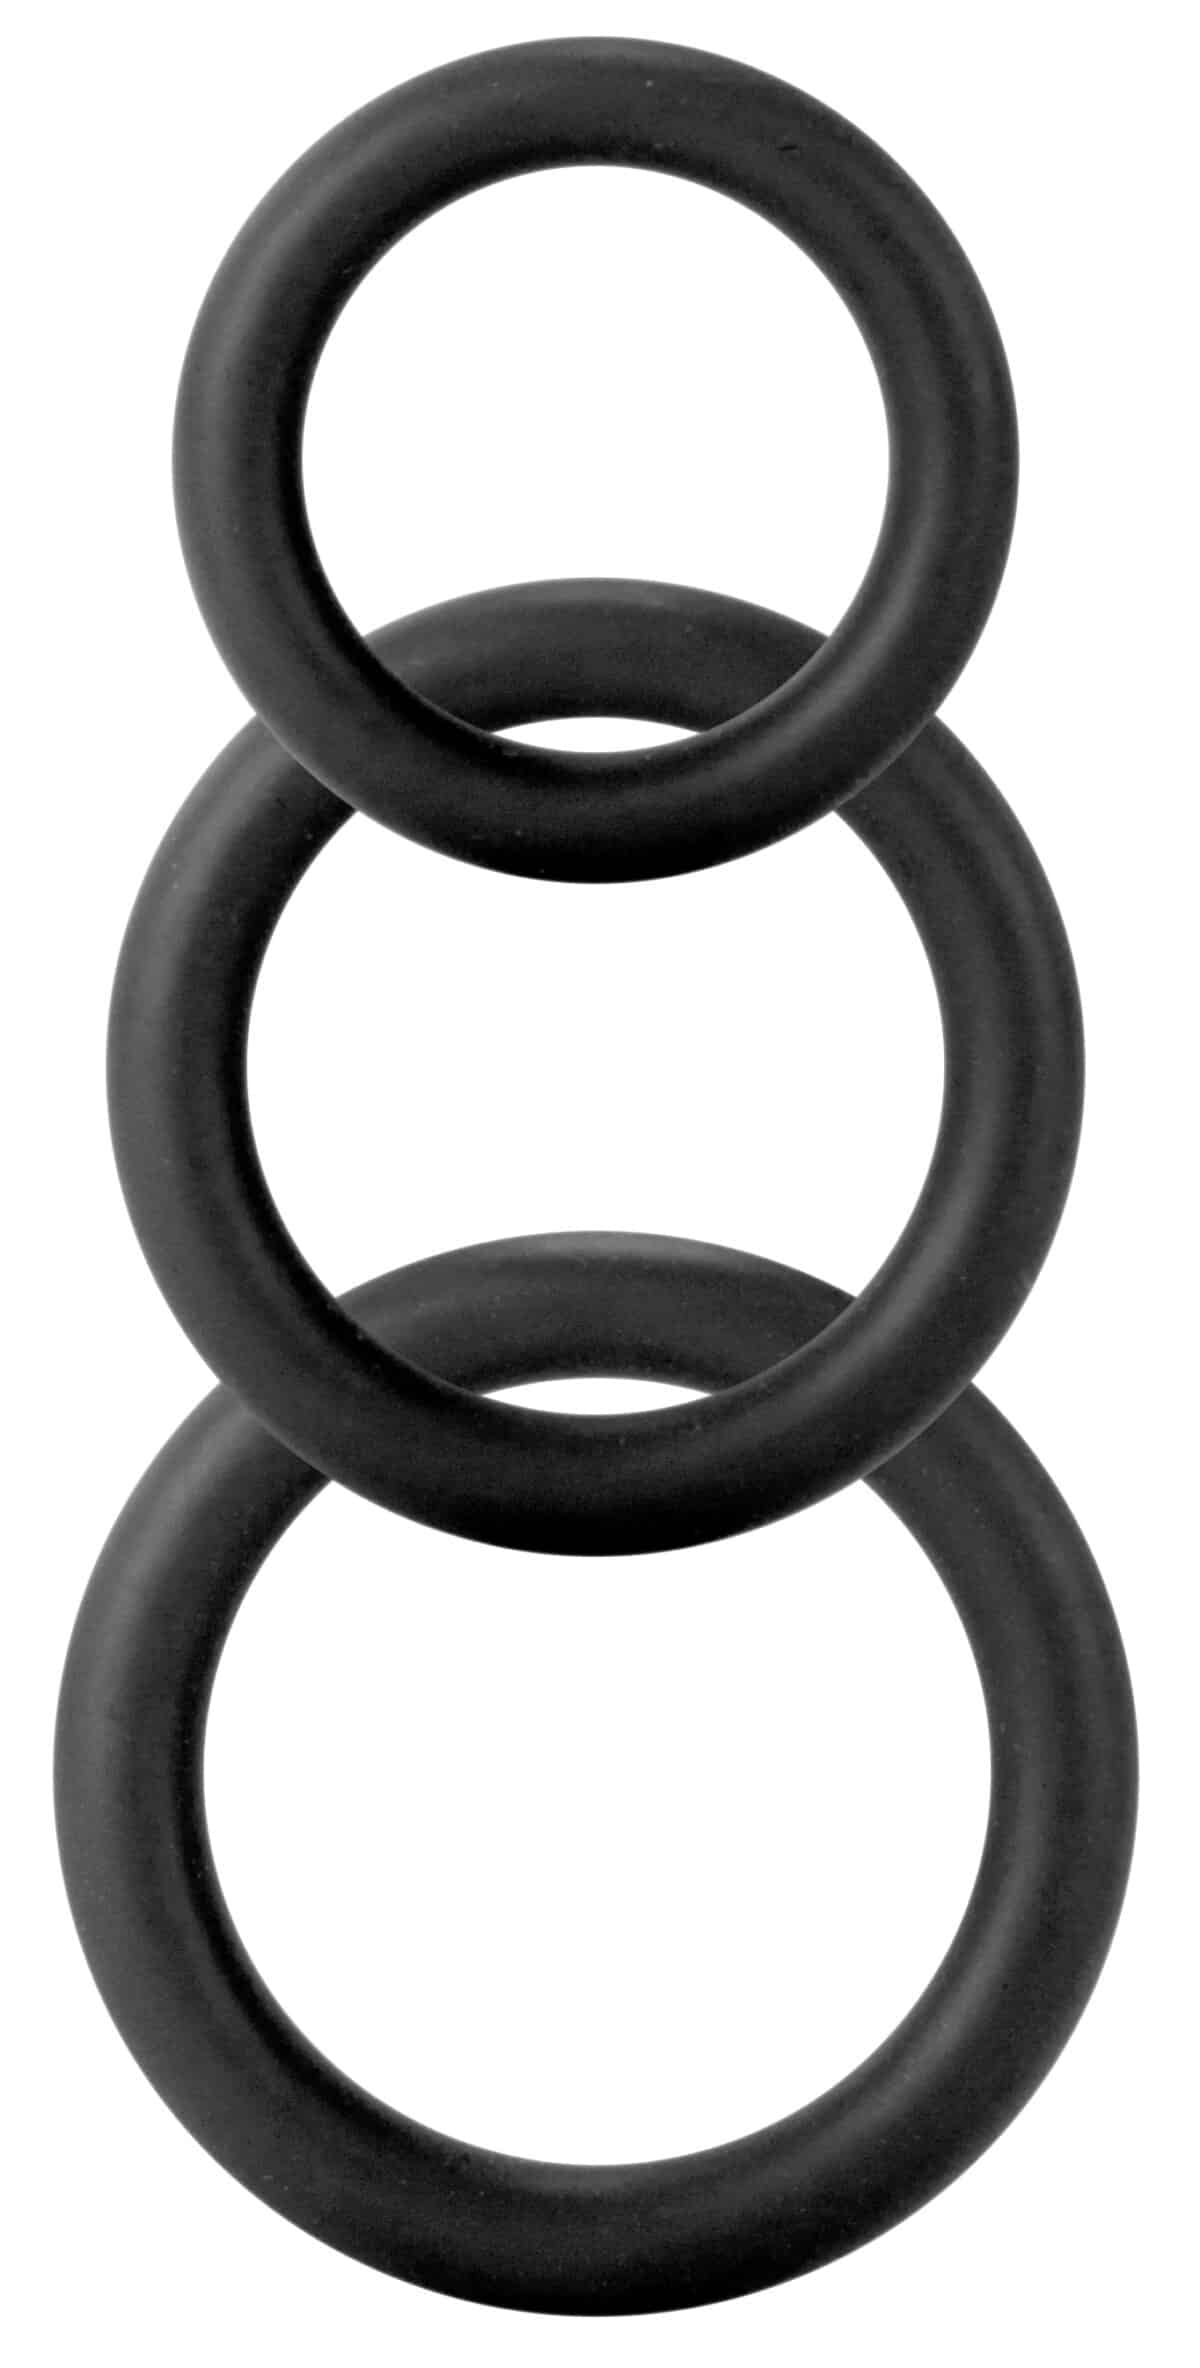 Twiddle Rings 3 Sizes Black